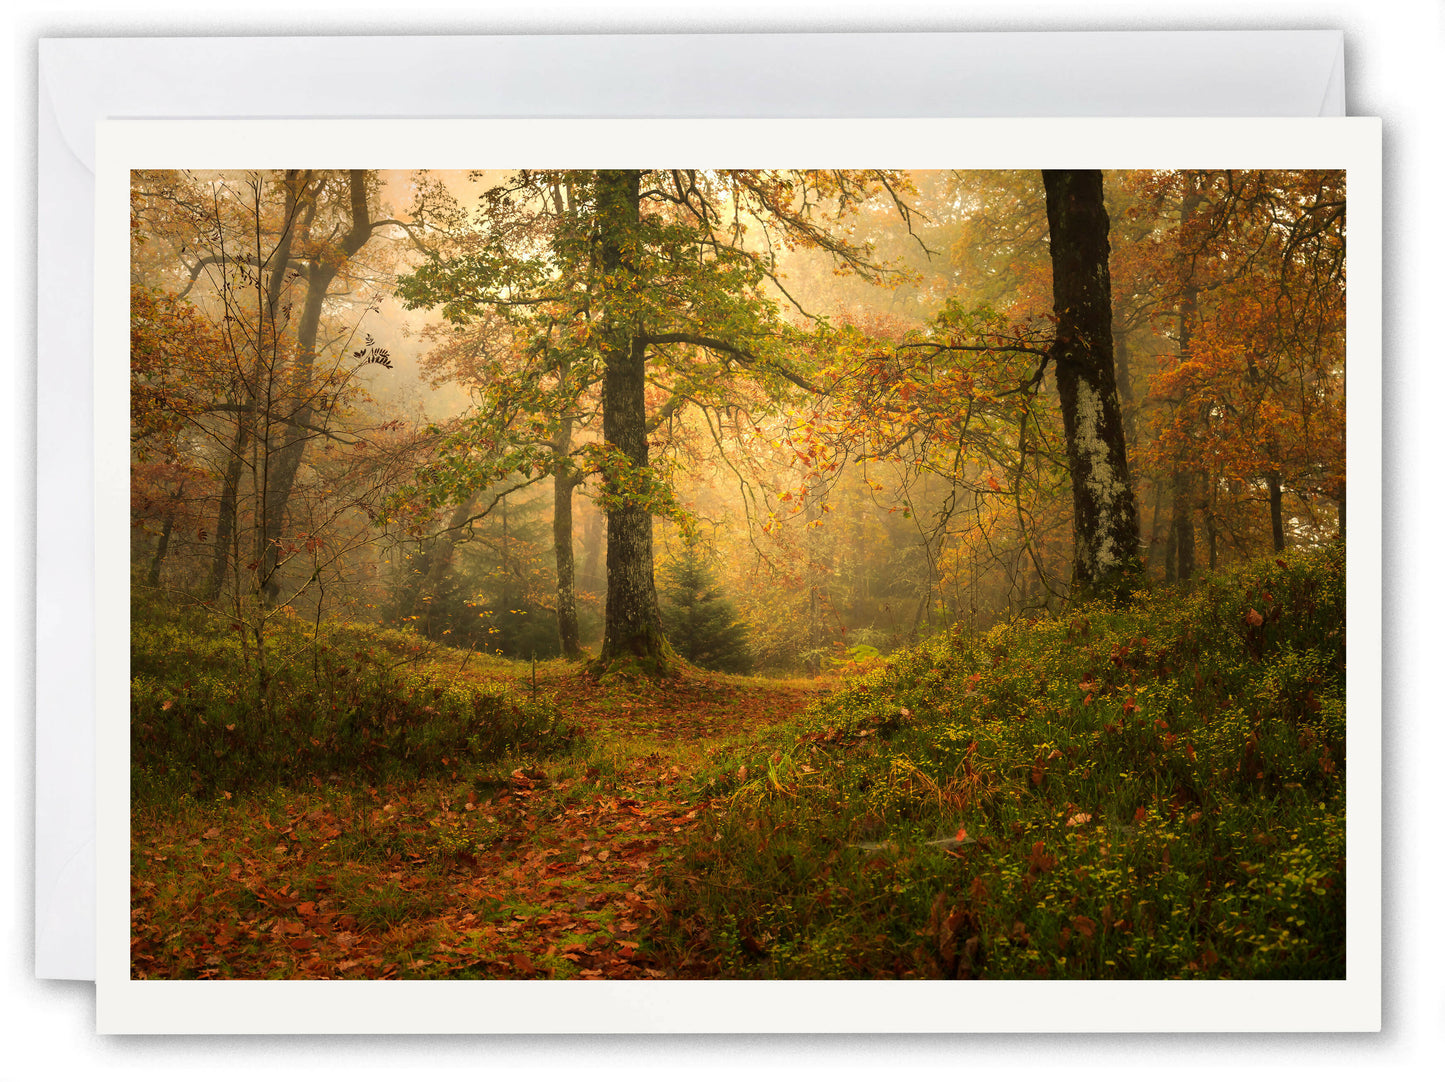 Trossachs Loch Ard Forest in Autumn - Scotland Greeting Card - Blank Inside